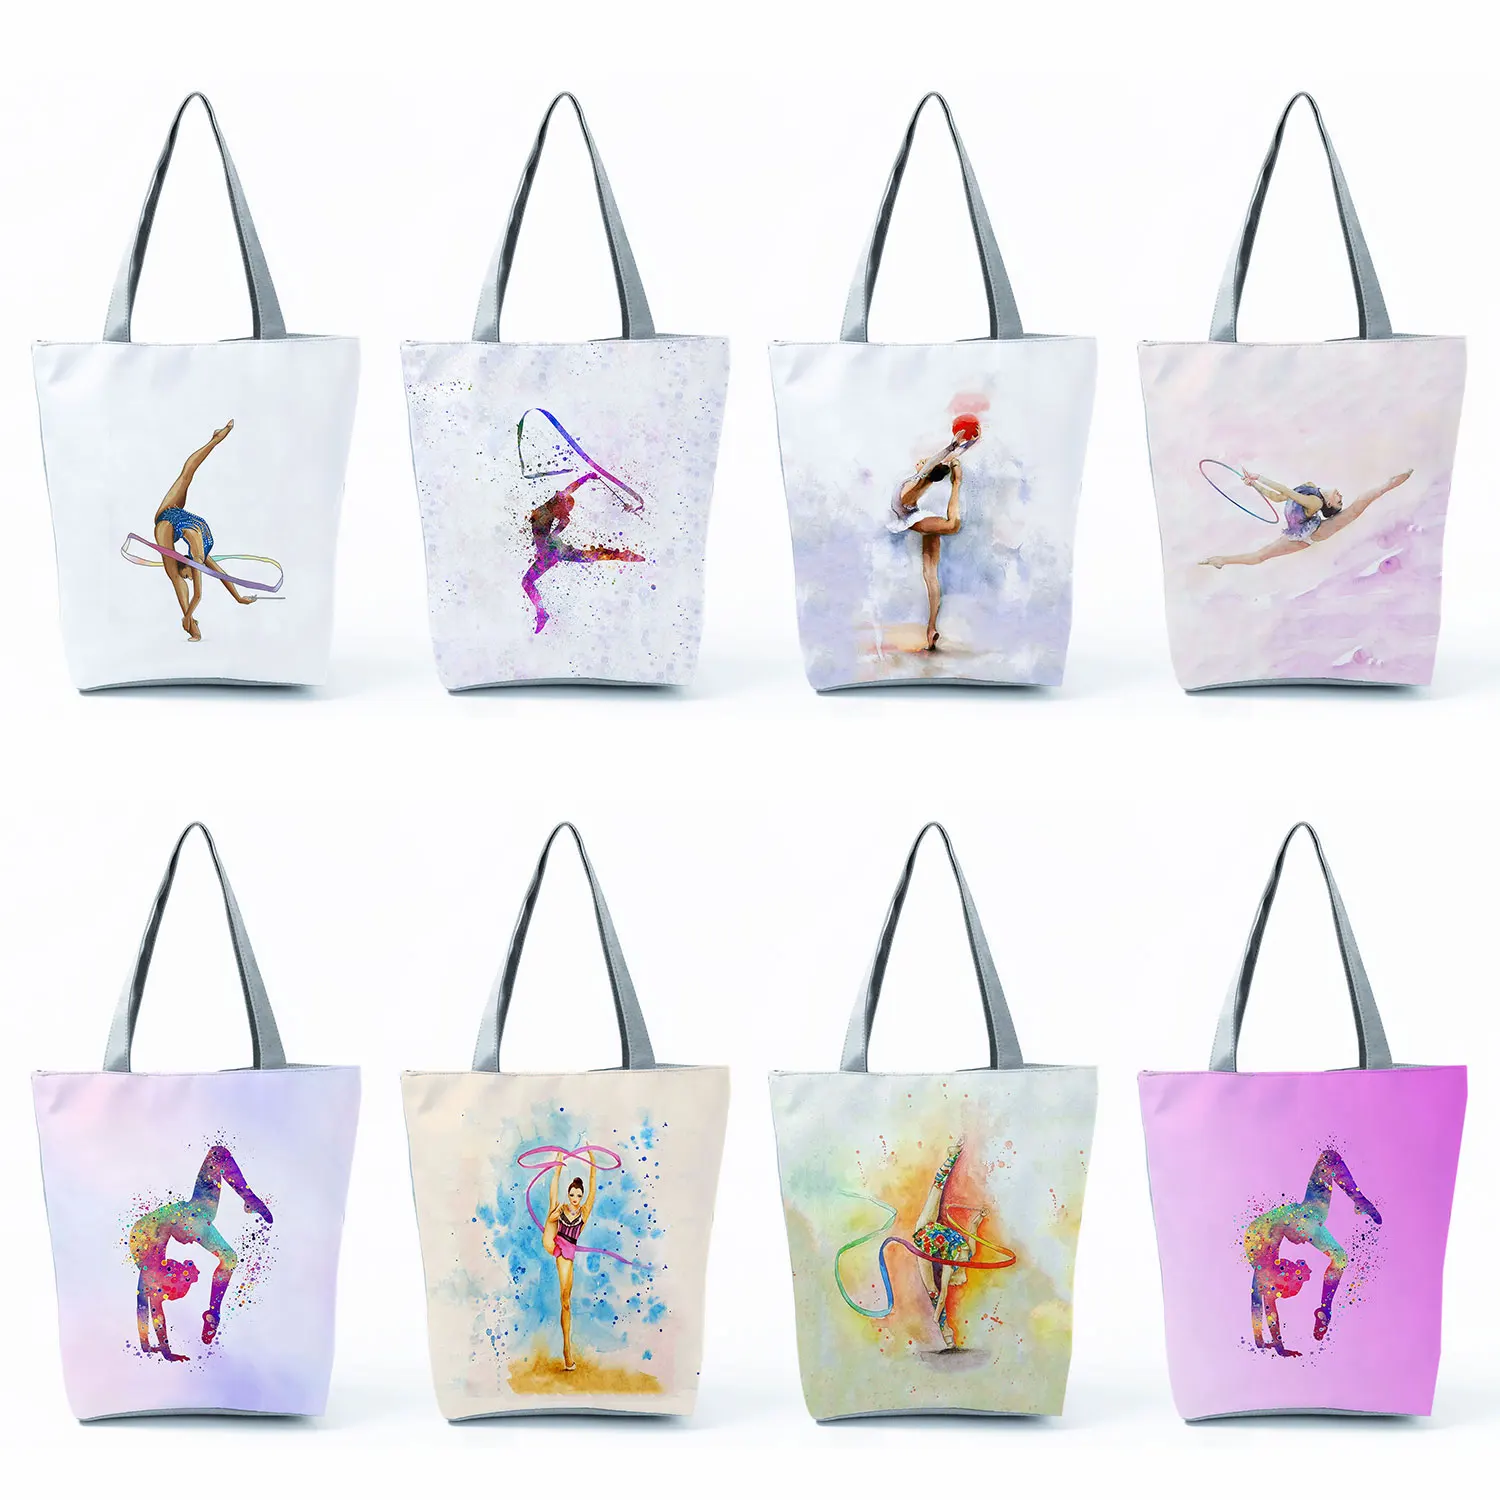 

Handbags For Women Gymnast Storage Bag for Travel Shoulder Bag Ladies Big The Fashion Tote Bag Watercolor Gymnastics Art Printed